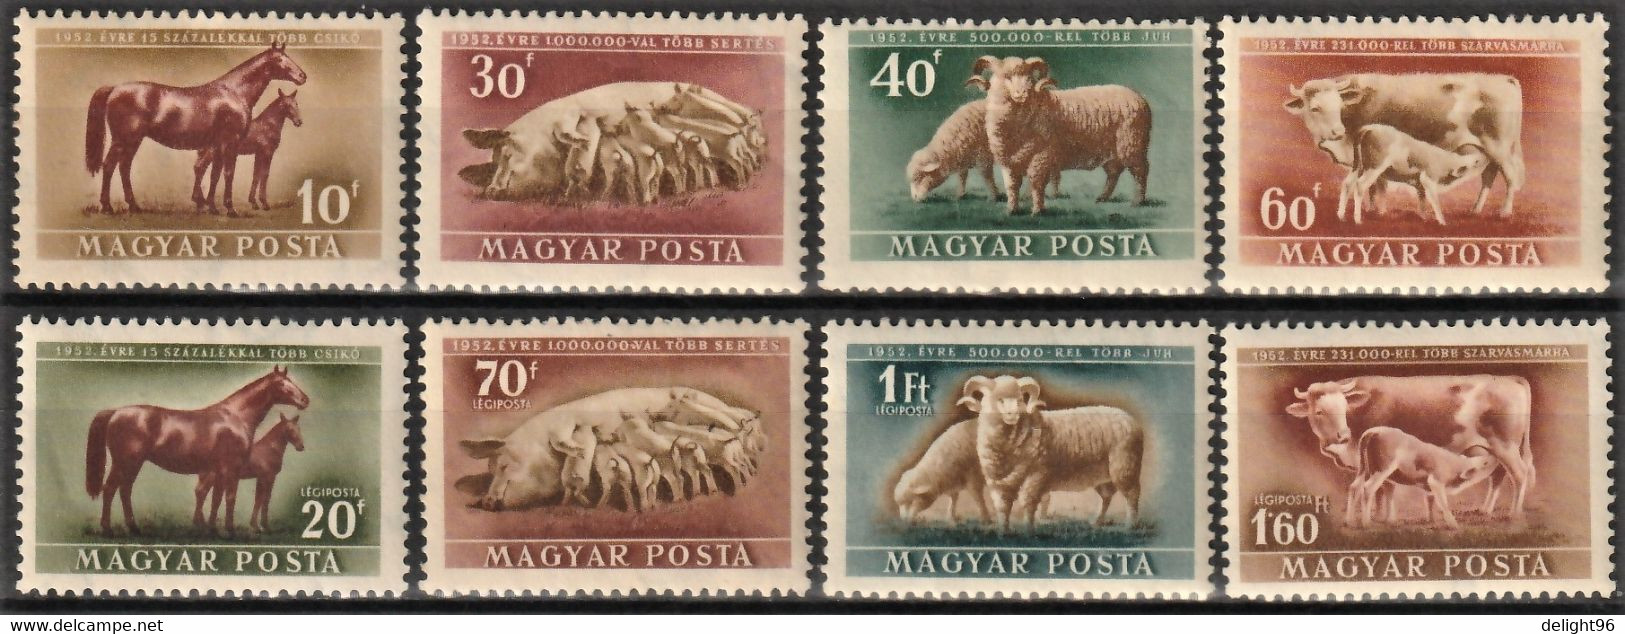 1951 Hungary Livestock Breeding: Horse, Domestic Pig, Sheep, Cattle Set (** / MNH / UMM) - Farm